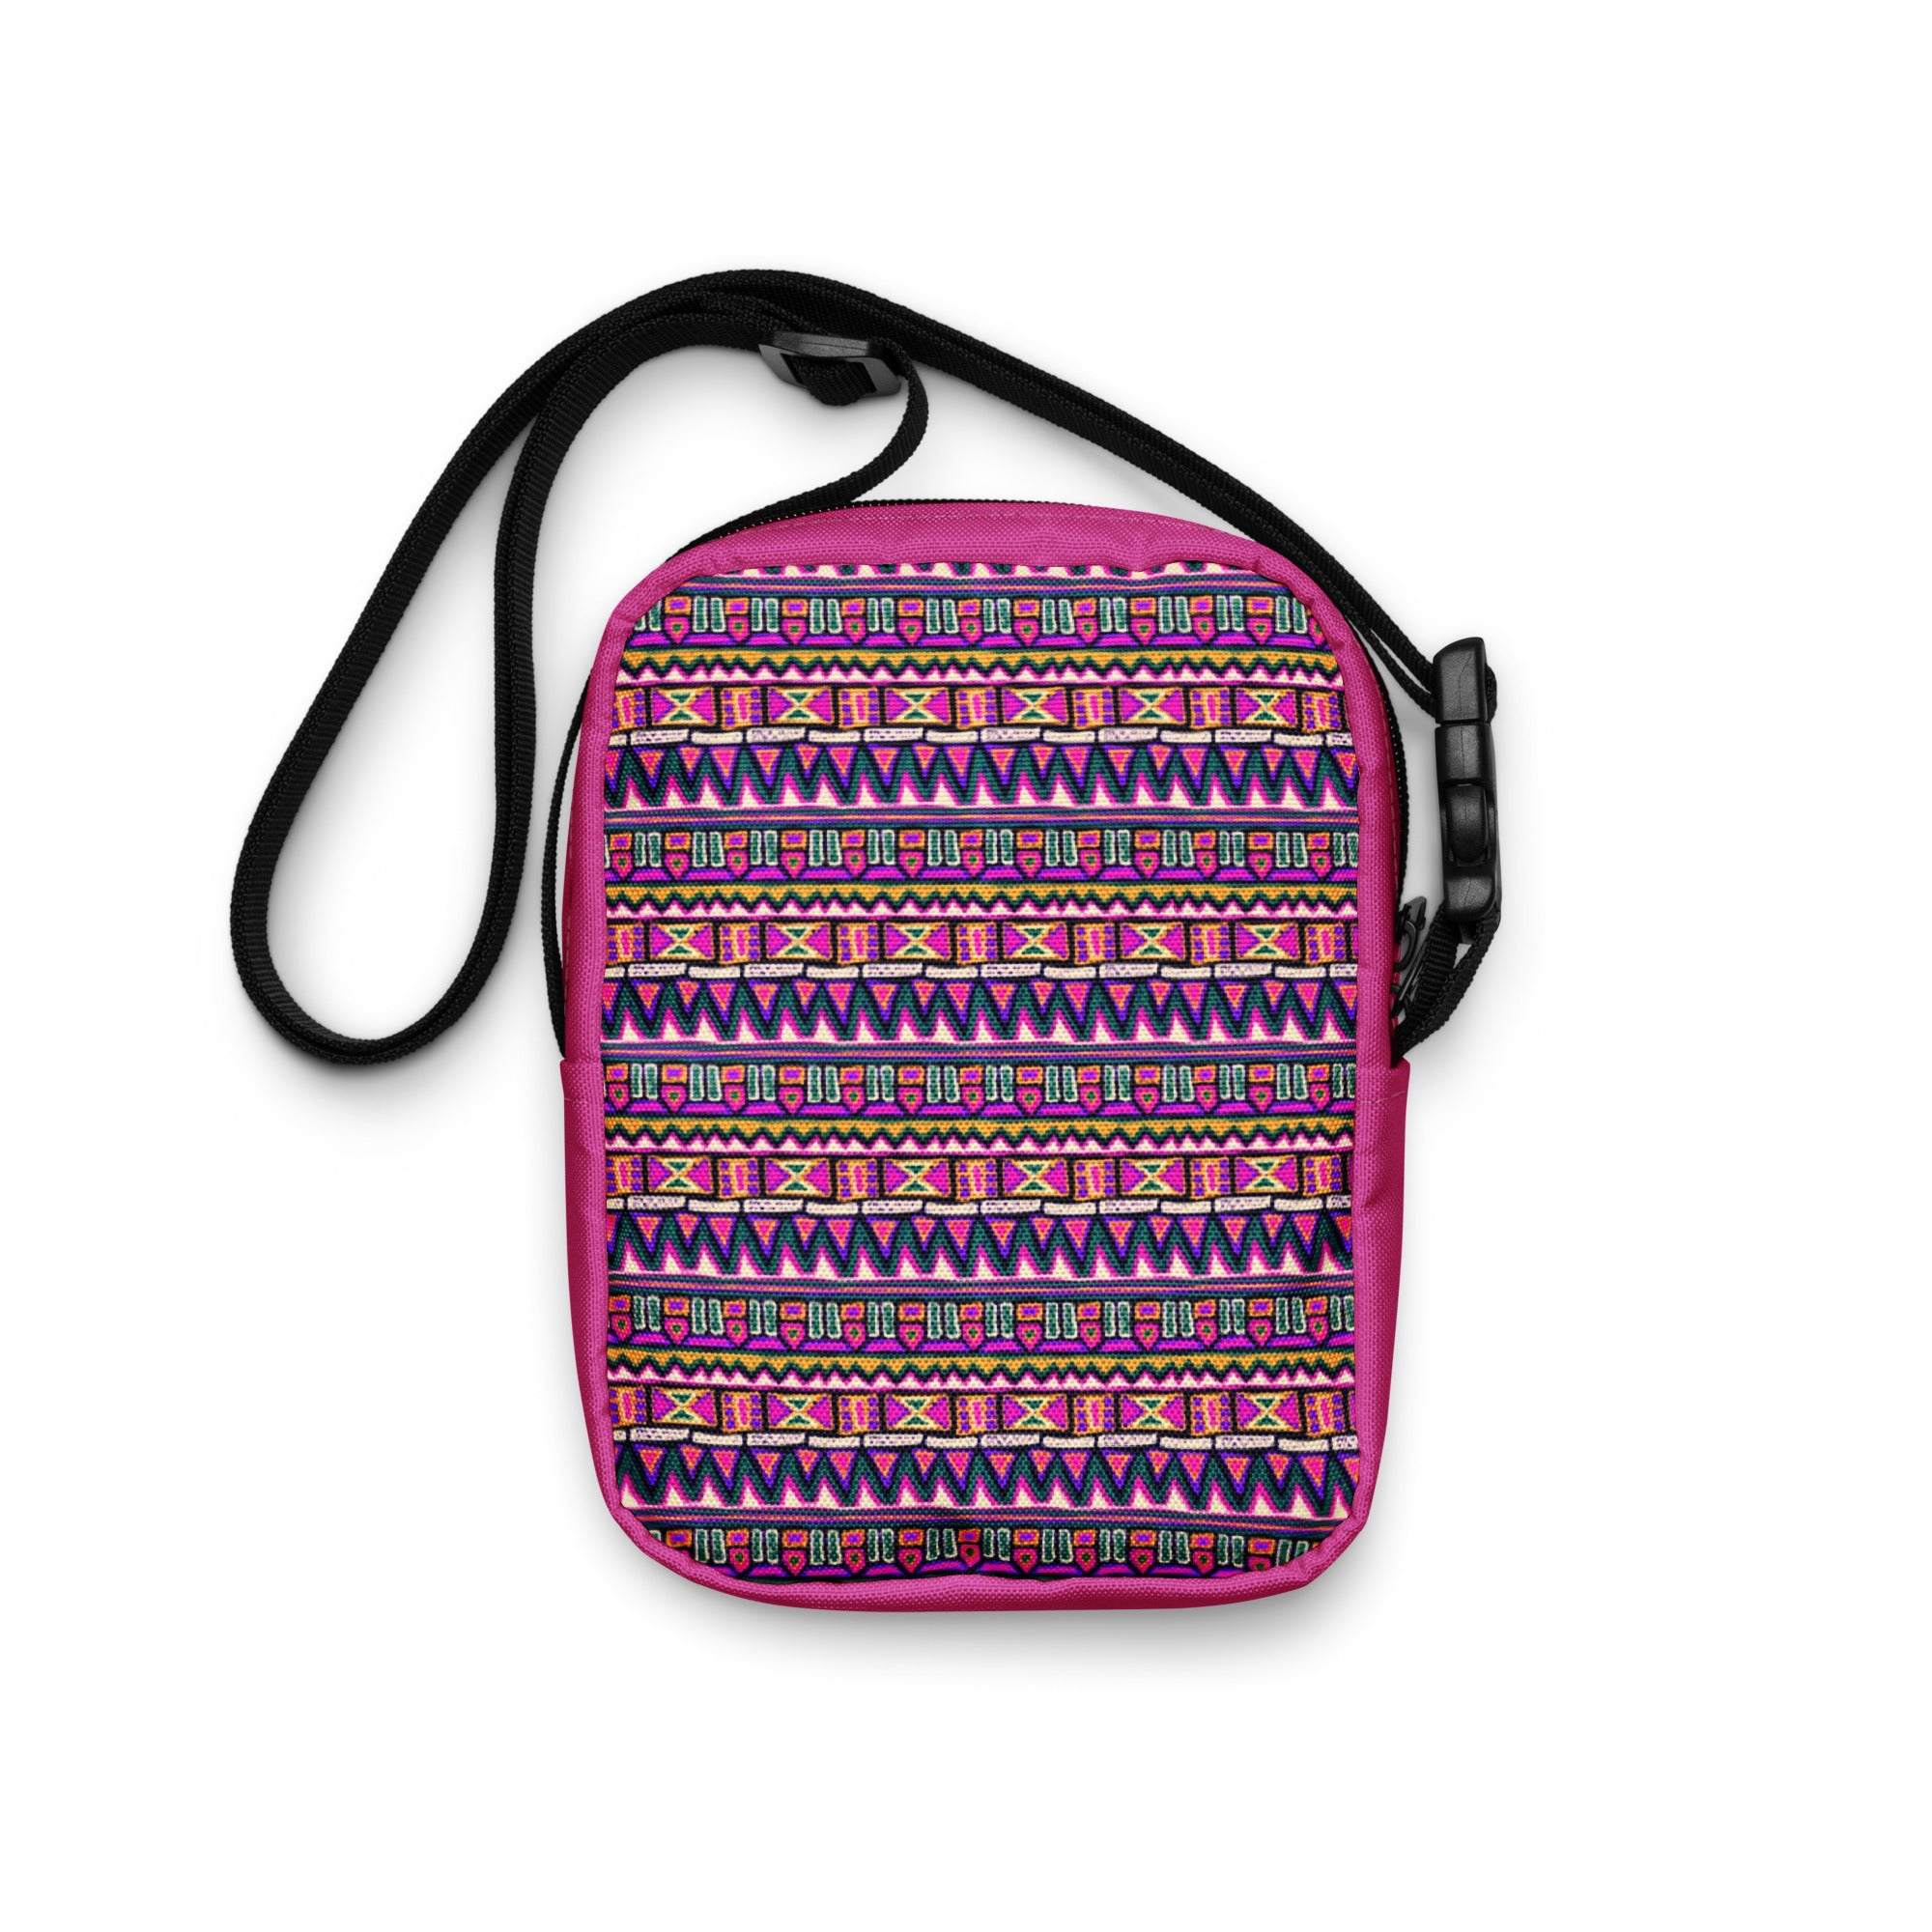 Native American Inspired Pattern Utility Crossbody Bag